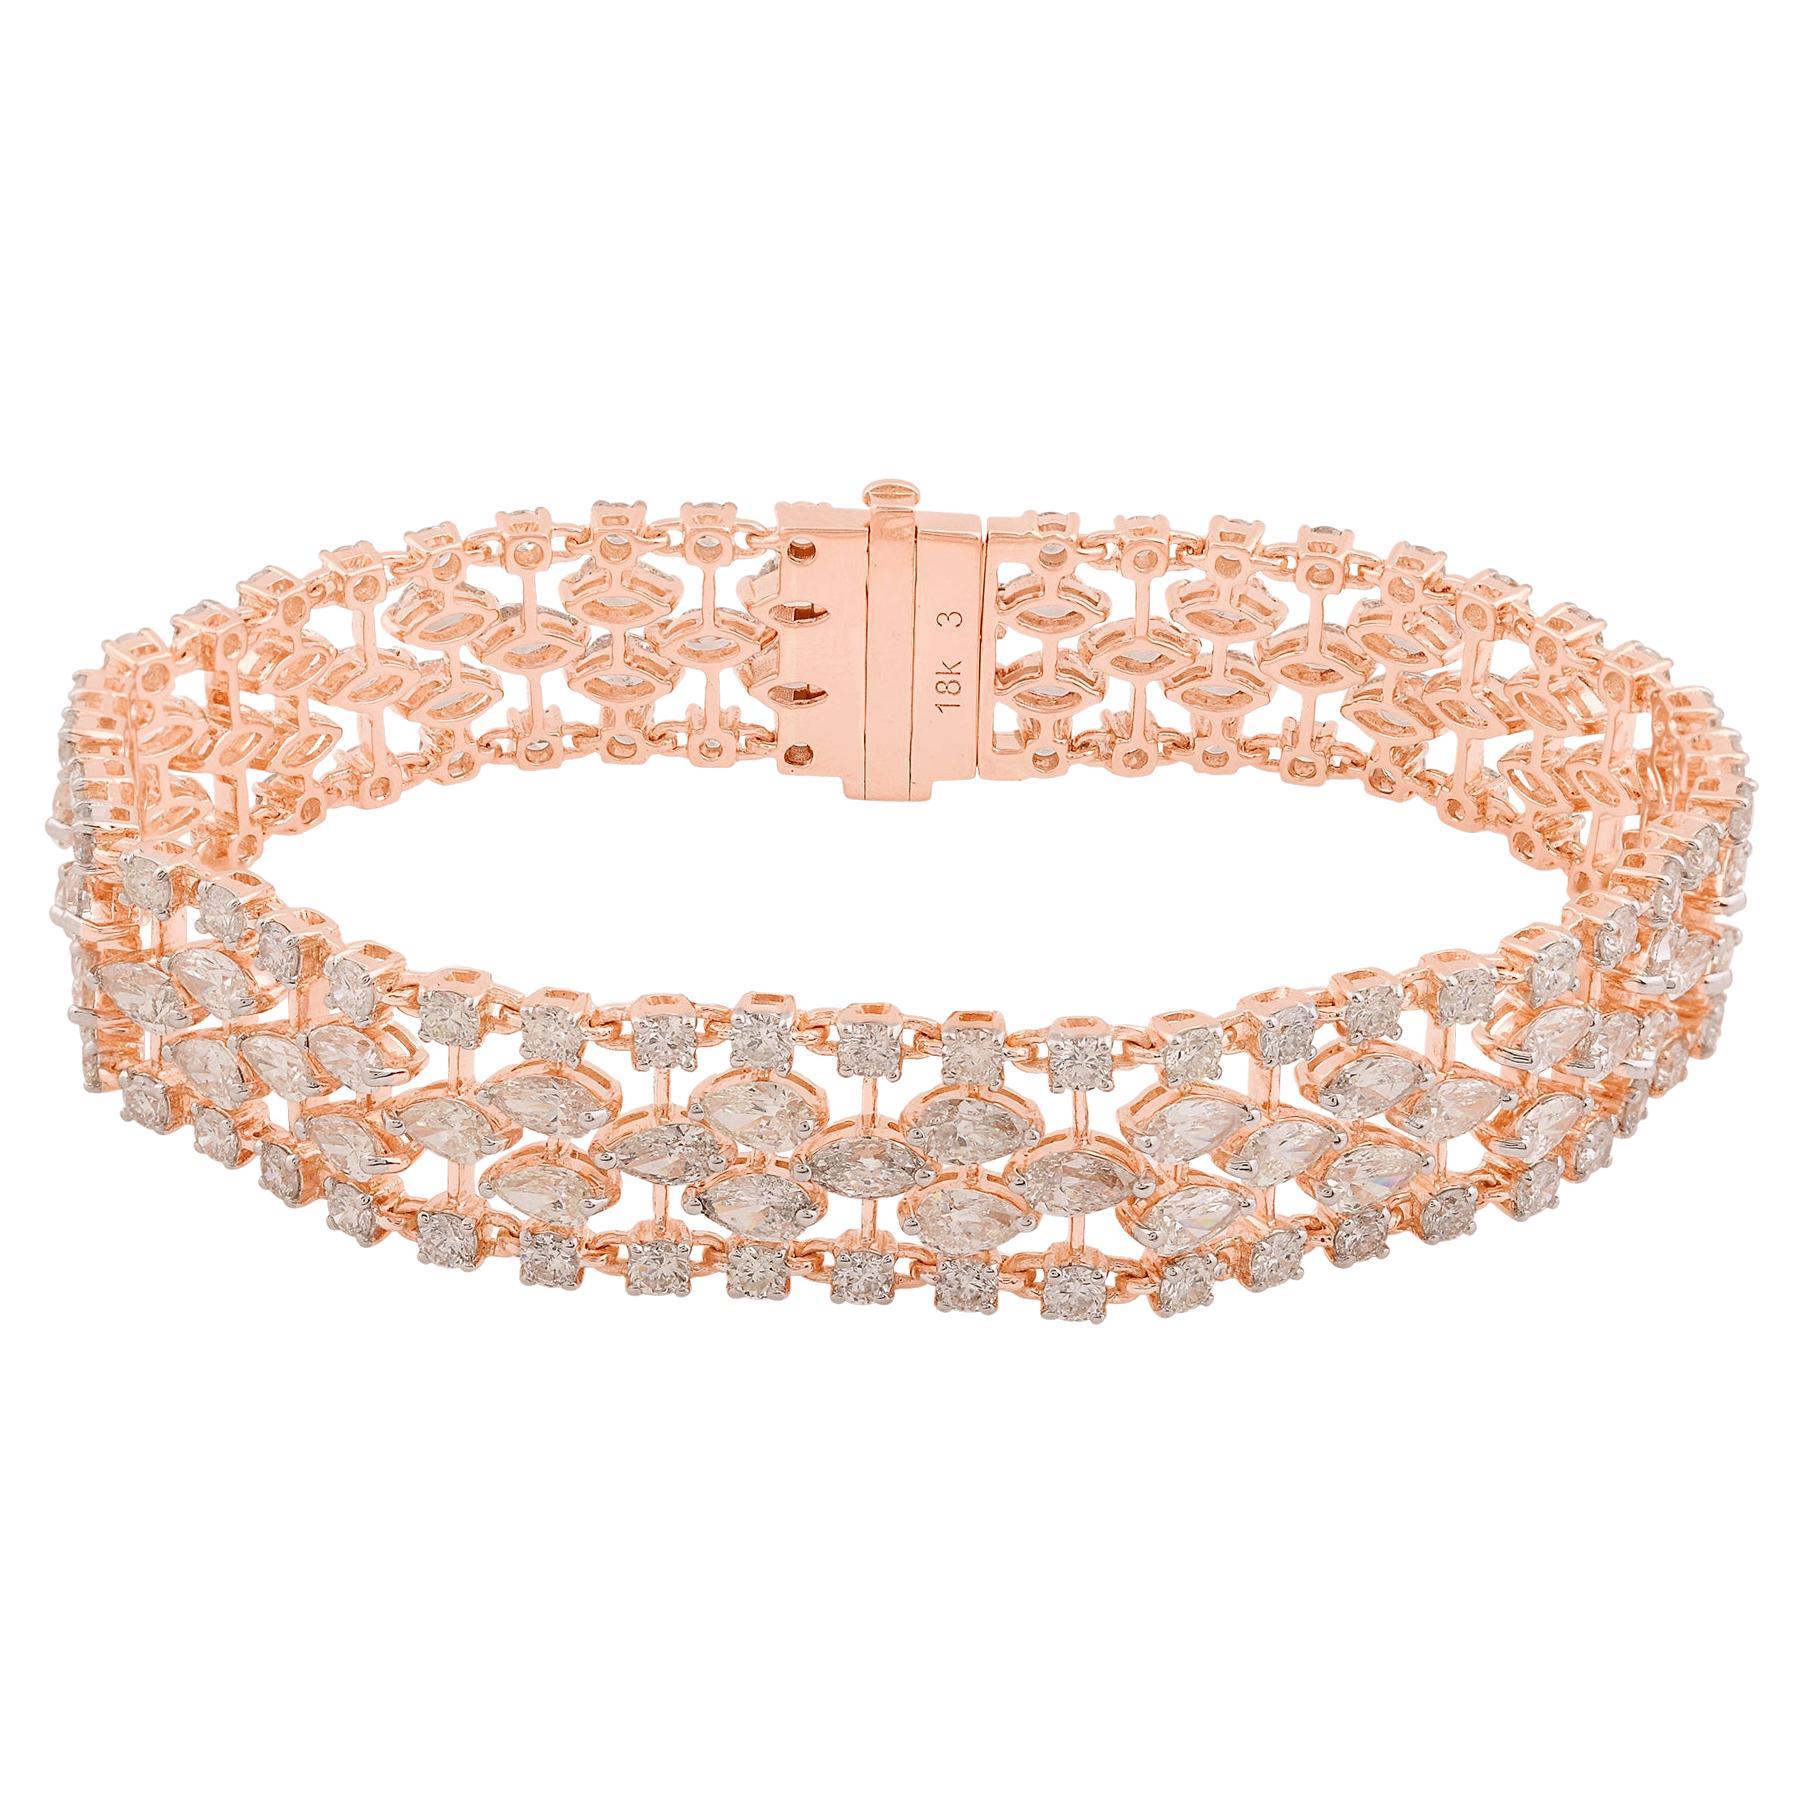 12 Carat SI Clarity HI Color Diamond Wedding Bracelet 18 Karat Rose Gold Jewelry